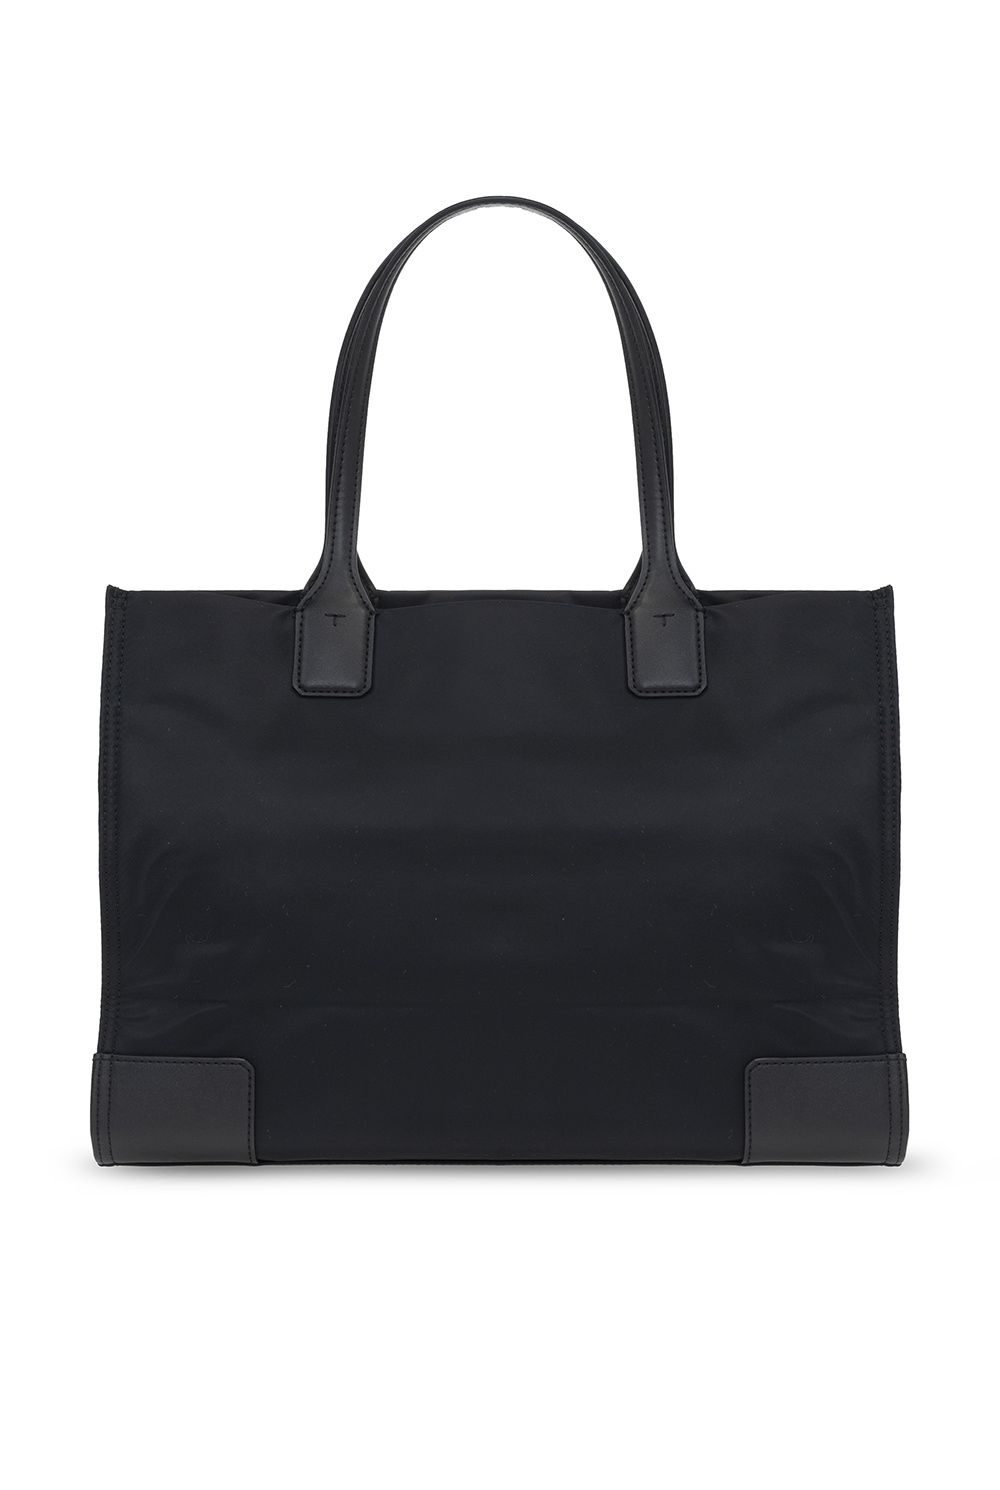 Tory Burch ‘Ella’ shopper bag